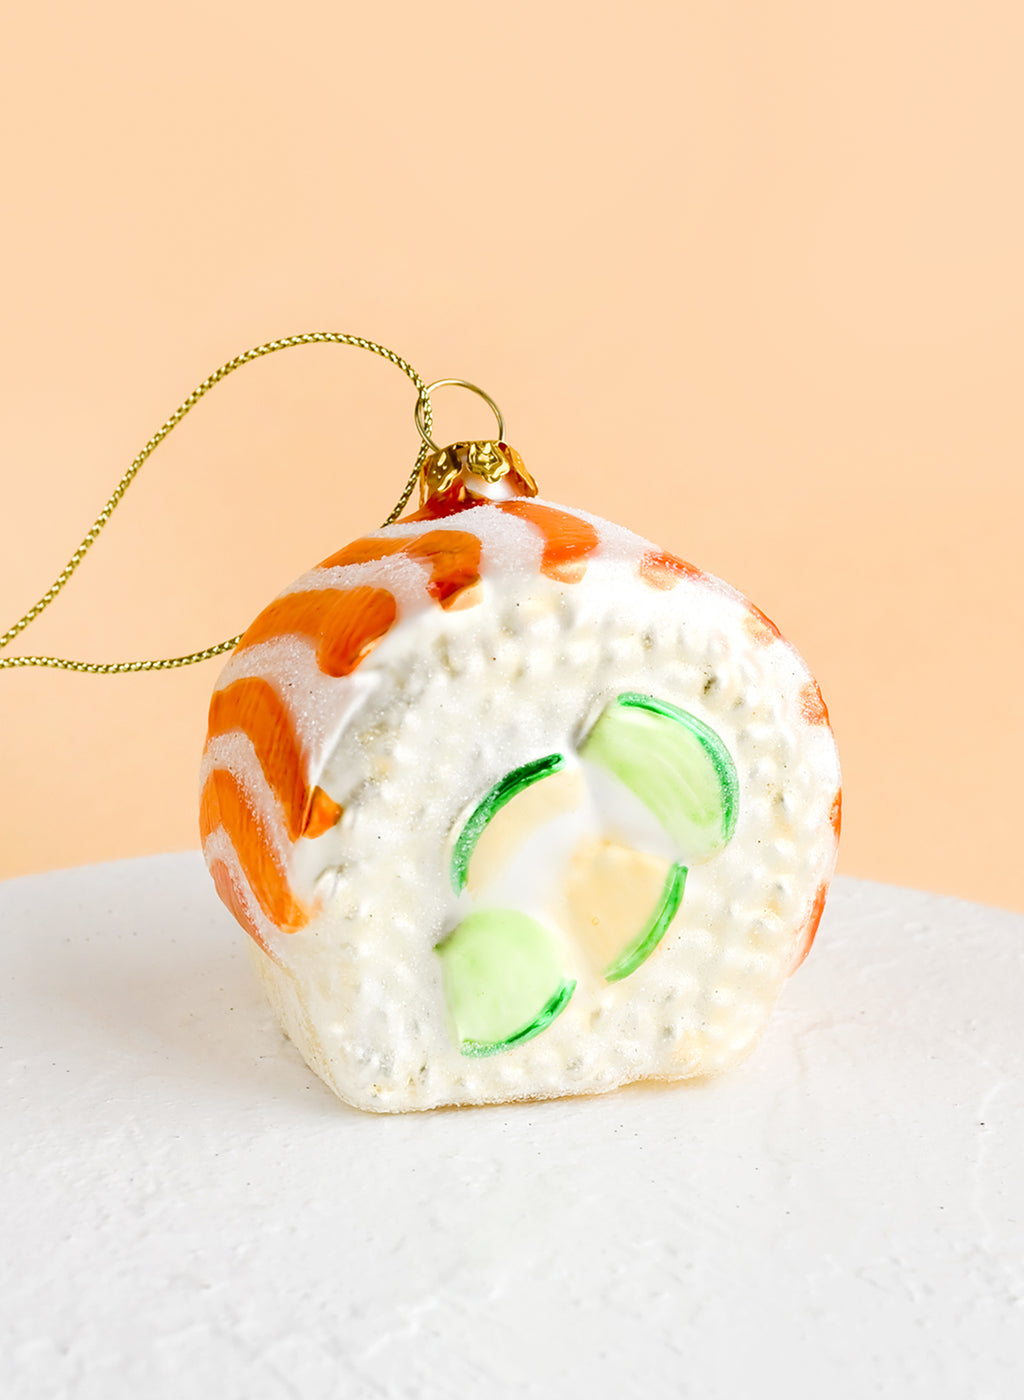 2: A decorative glass ornament in the shape of salmon avocado sushi roll.